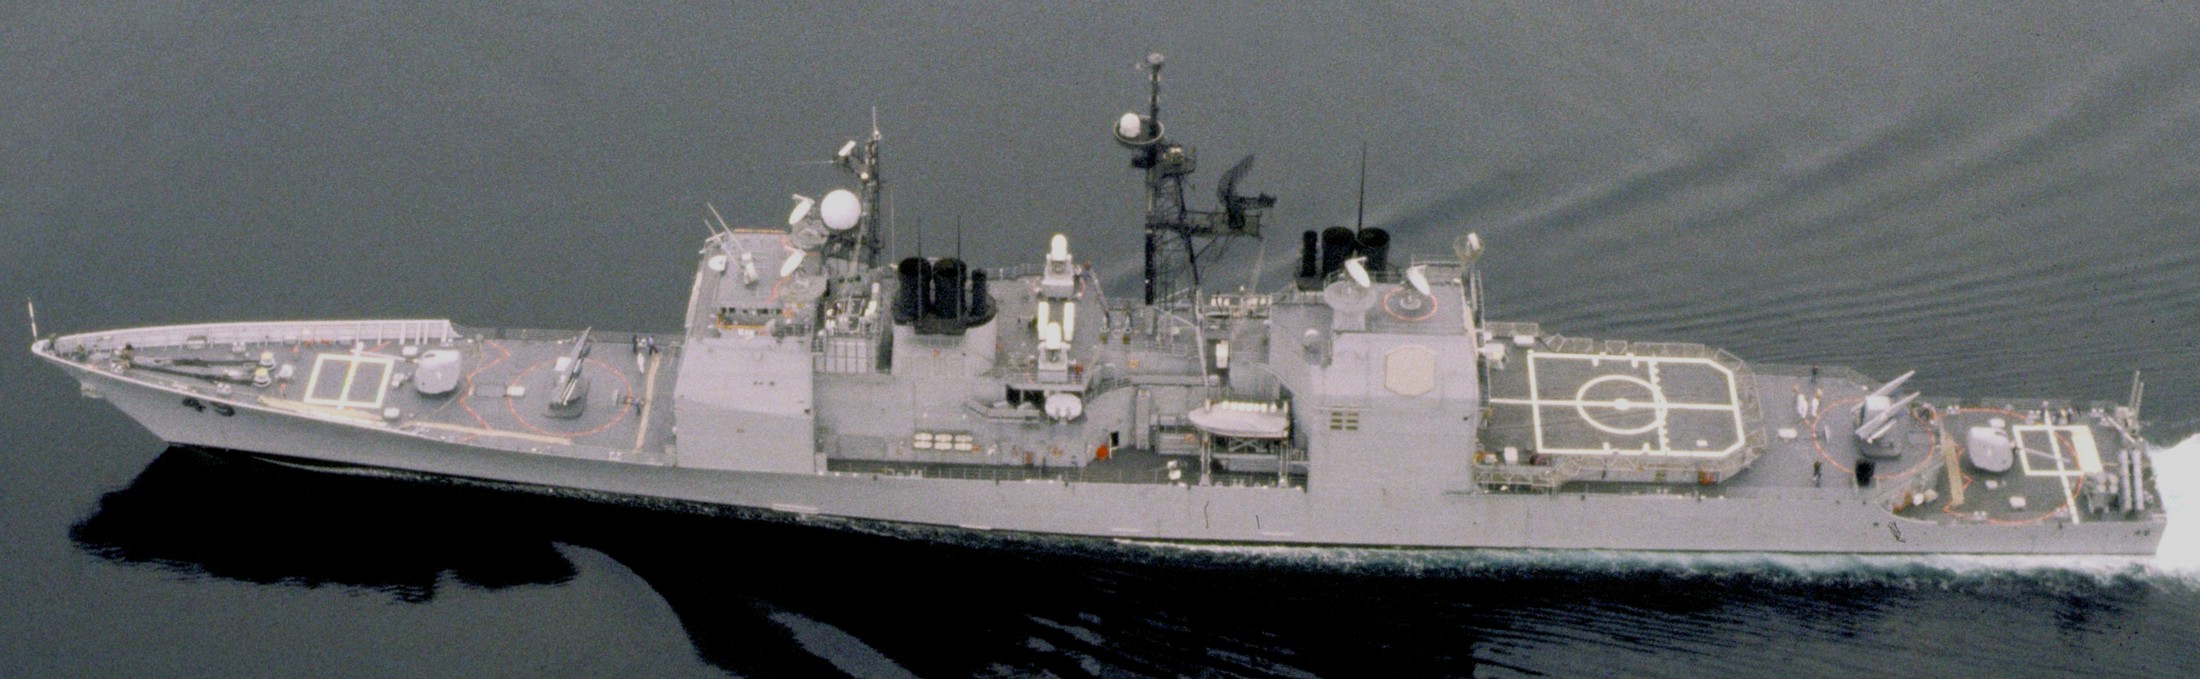 cg-49 uss vincennes ticonderoga class guided missile cruiser aegis us navy 62